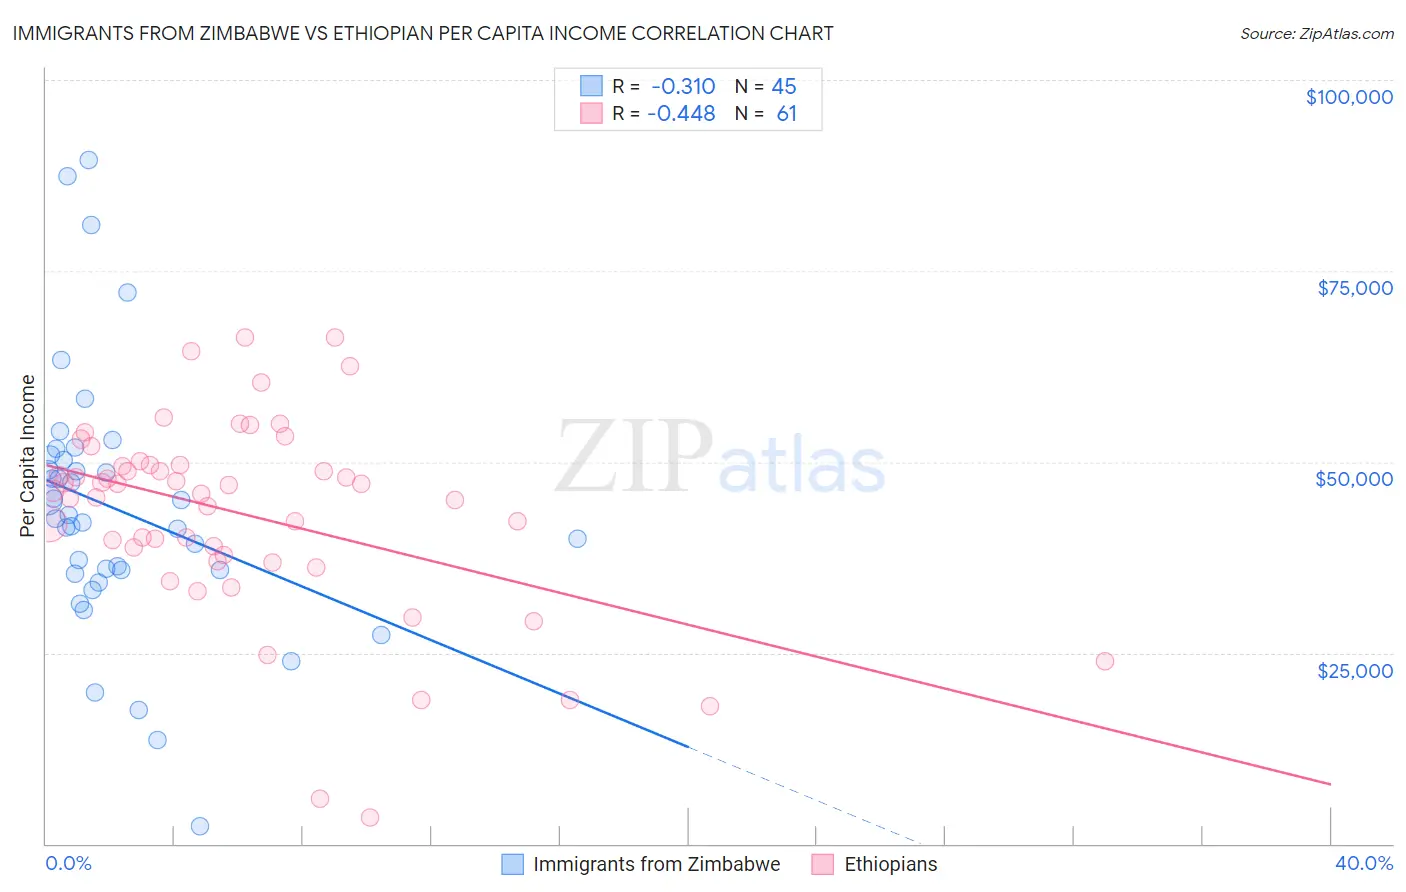 Immigrants from Zimbabwe vs Ethiopian Per Capita Income